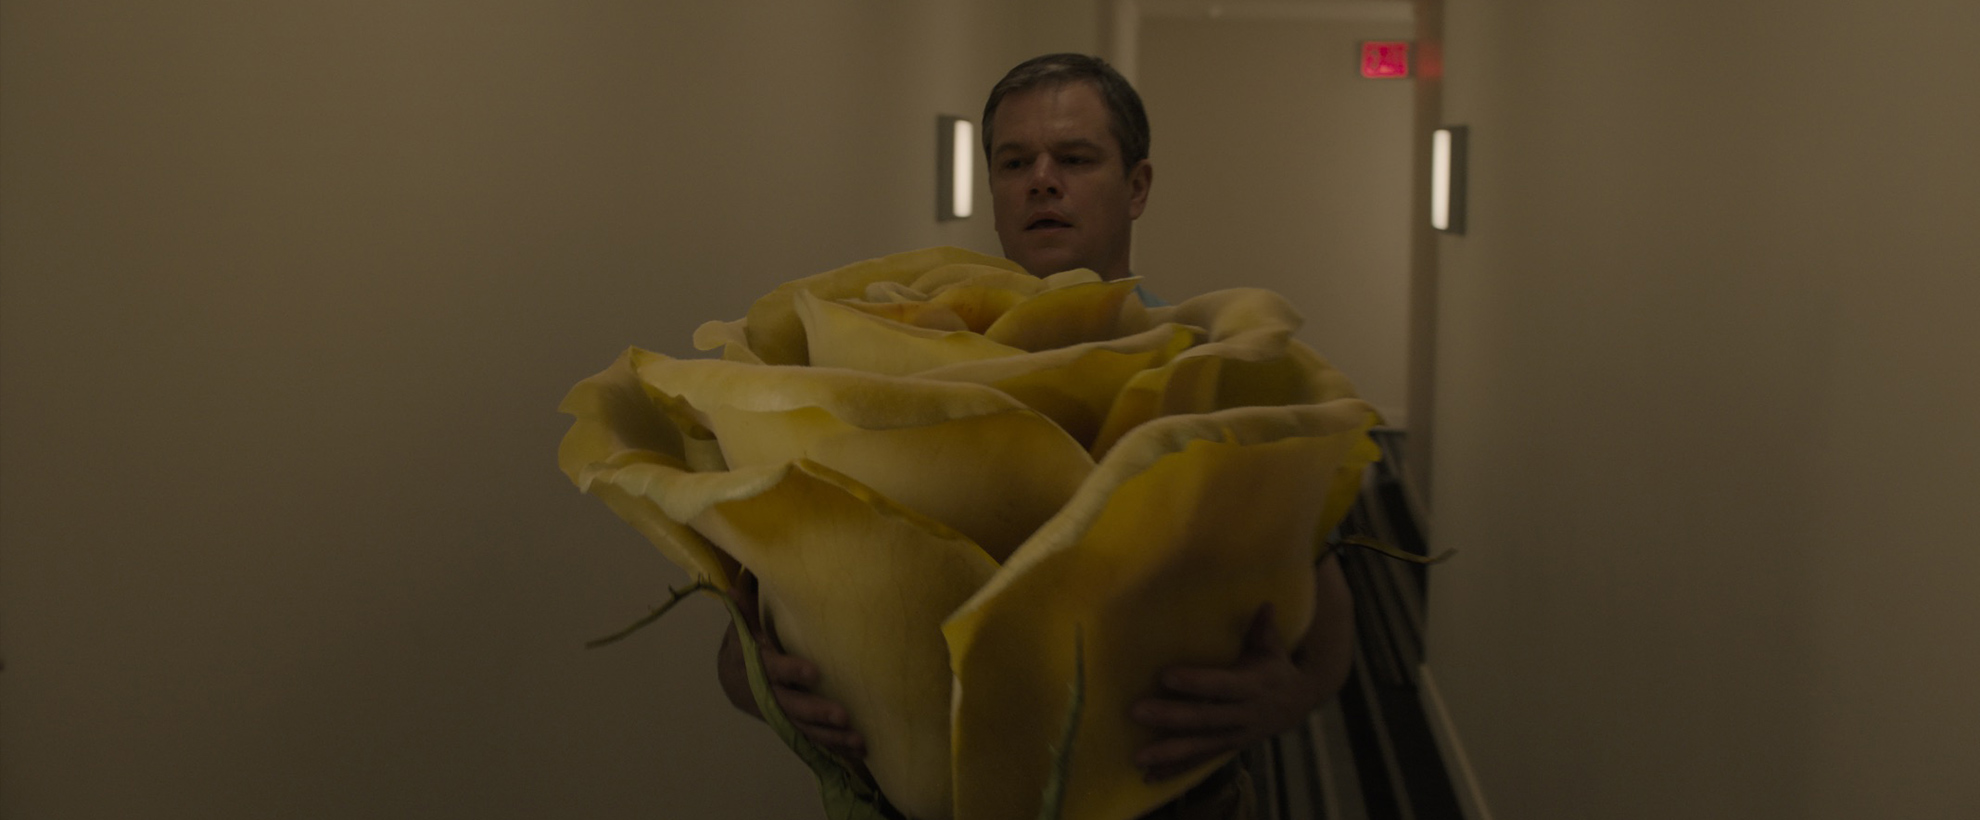 Matt Damon holds an enormous yellow rose bloom